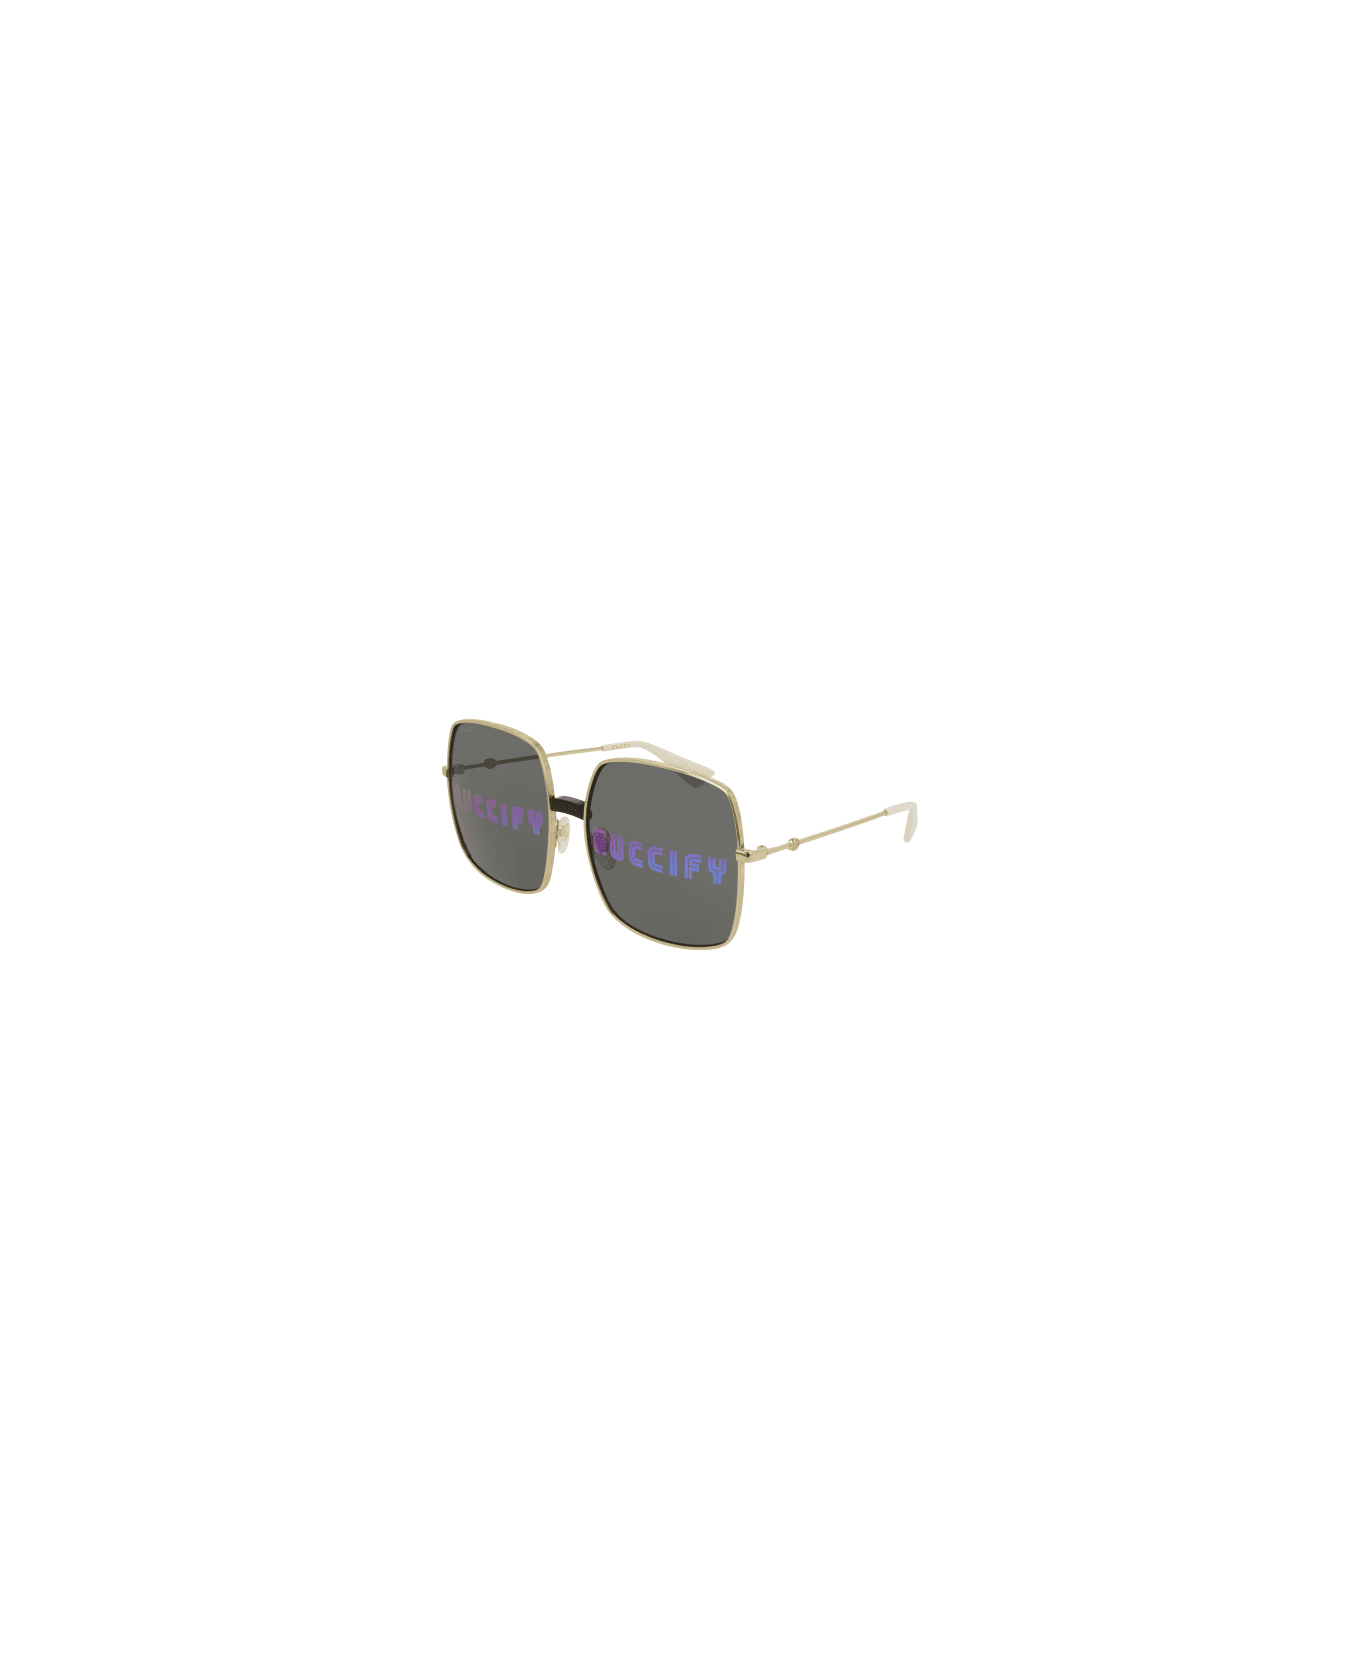 Gucci Eyewear GG0414S Sunglasses - Gold Gold Multicolor